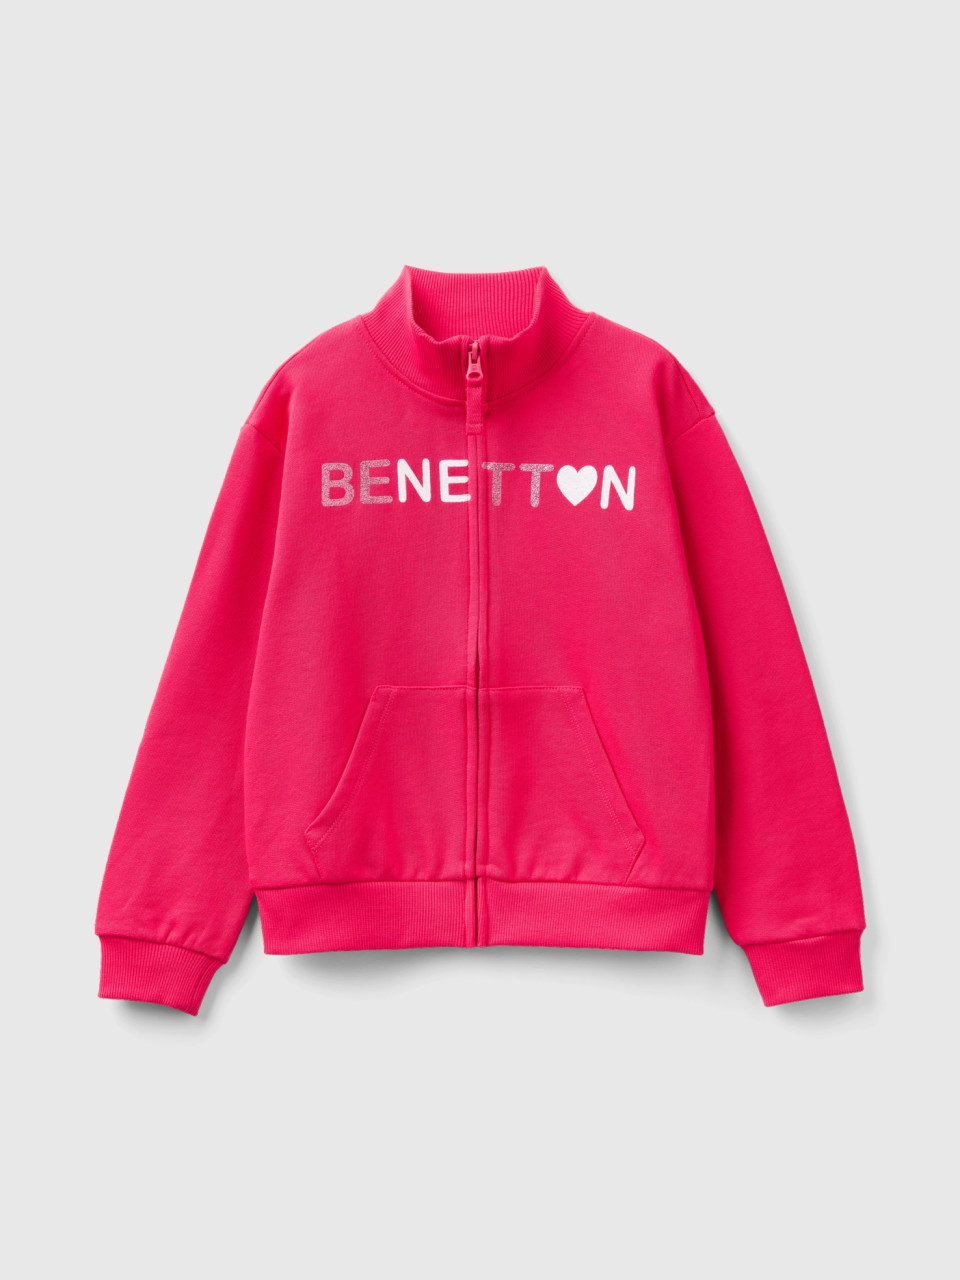 Benetton, Sweatshirt With Zip And Collar, Fuchsia, Kids